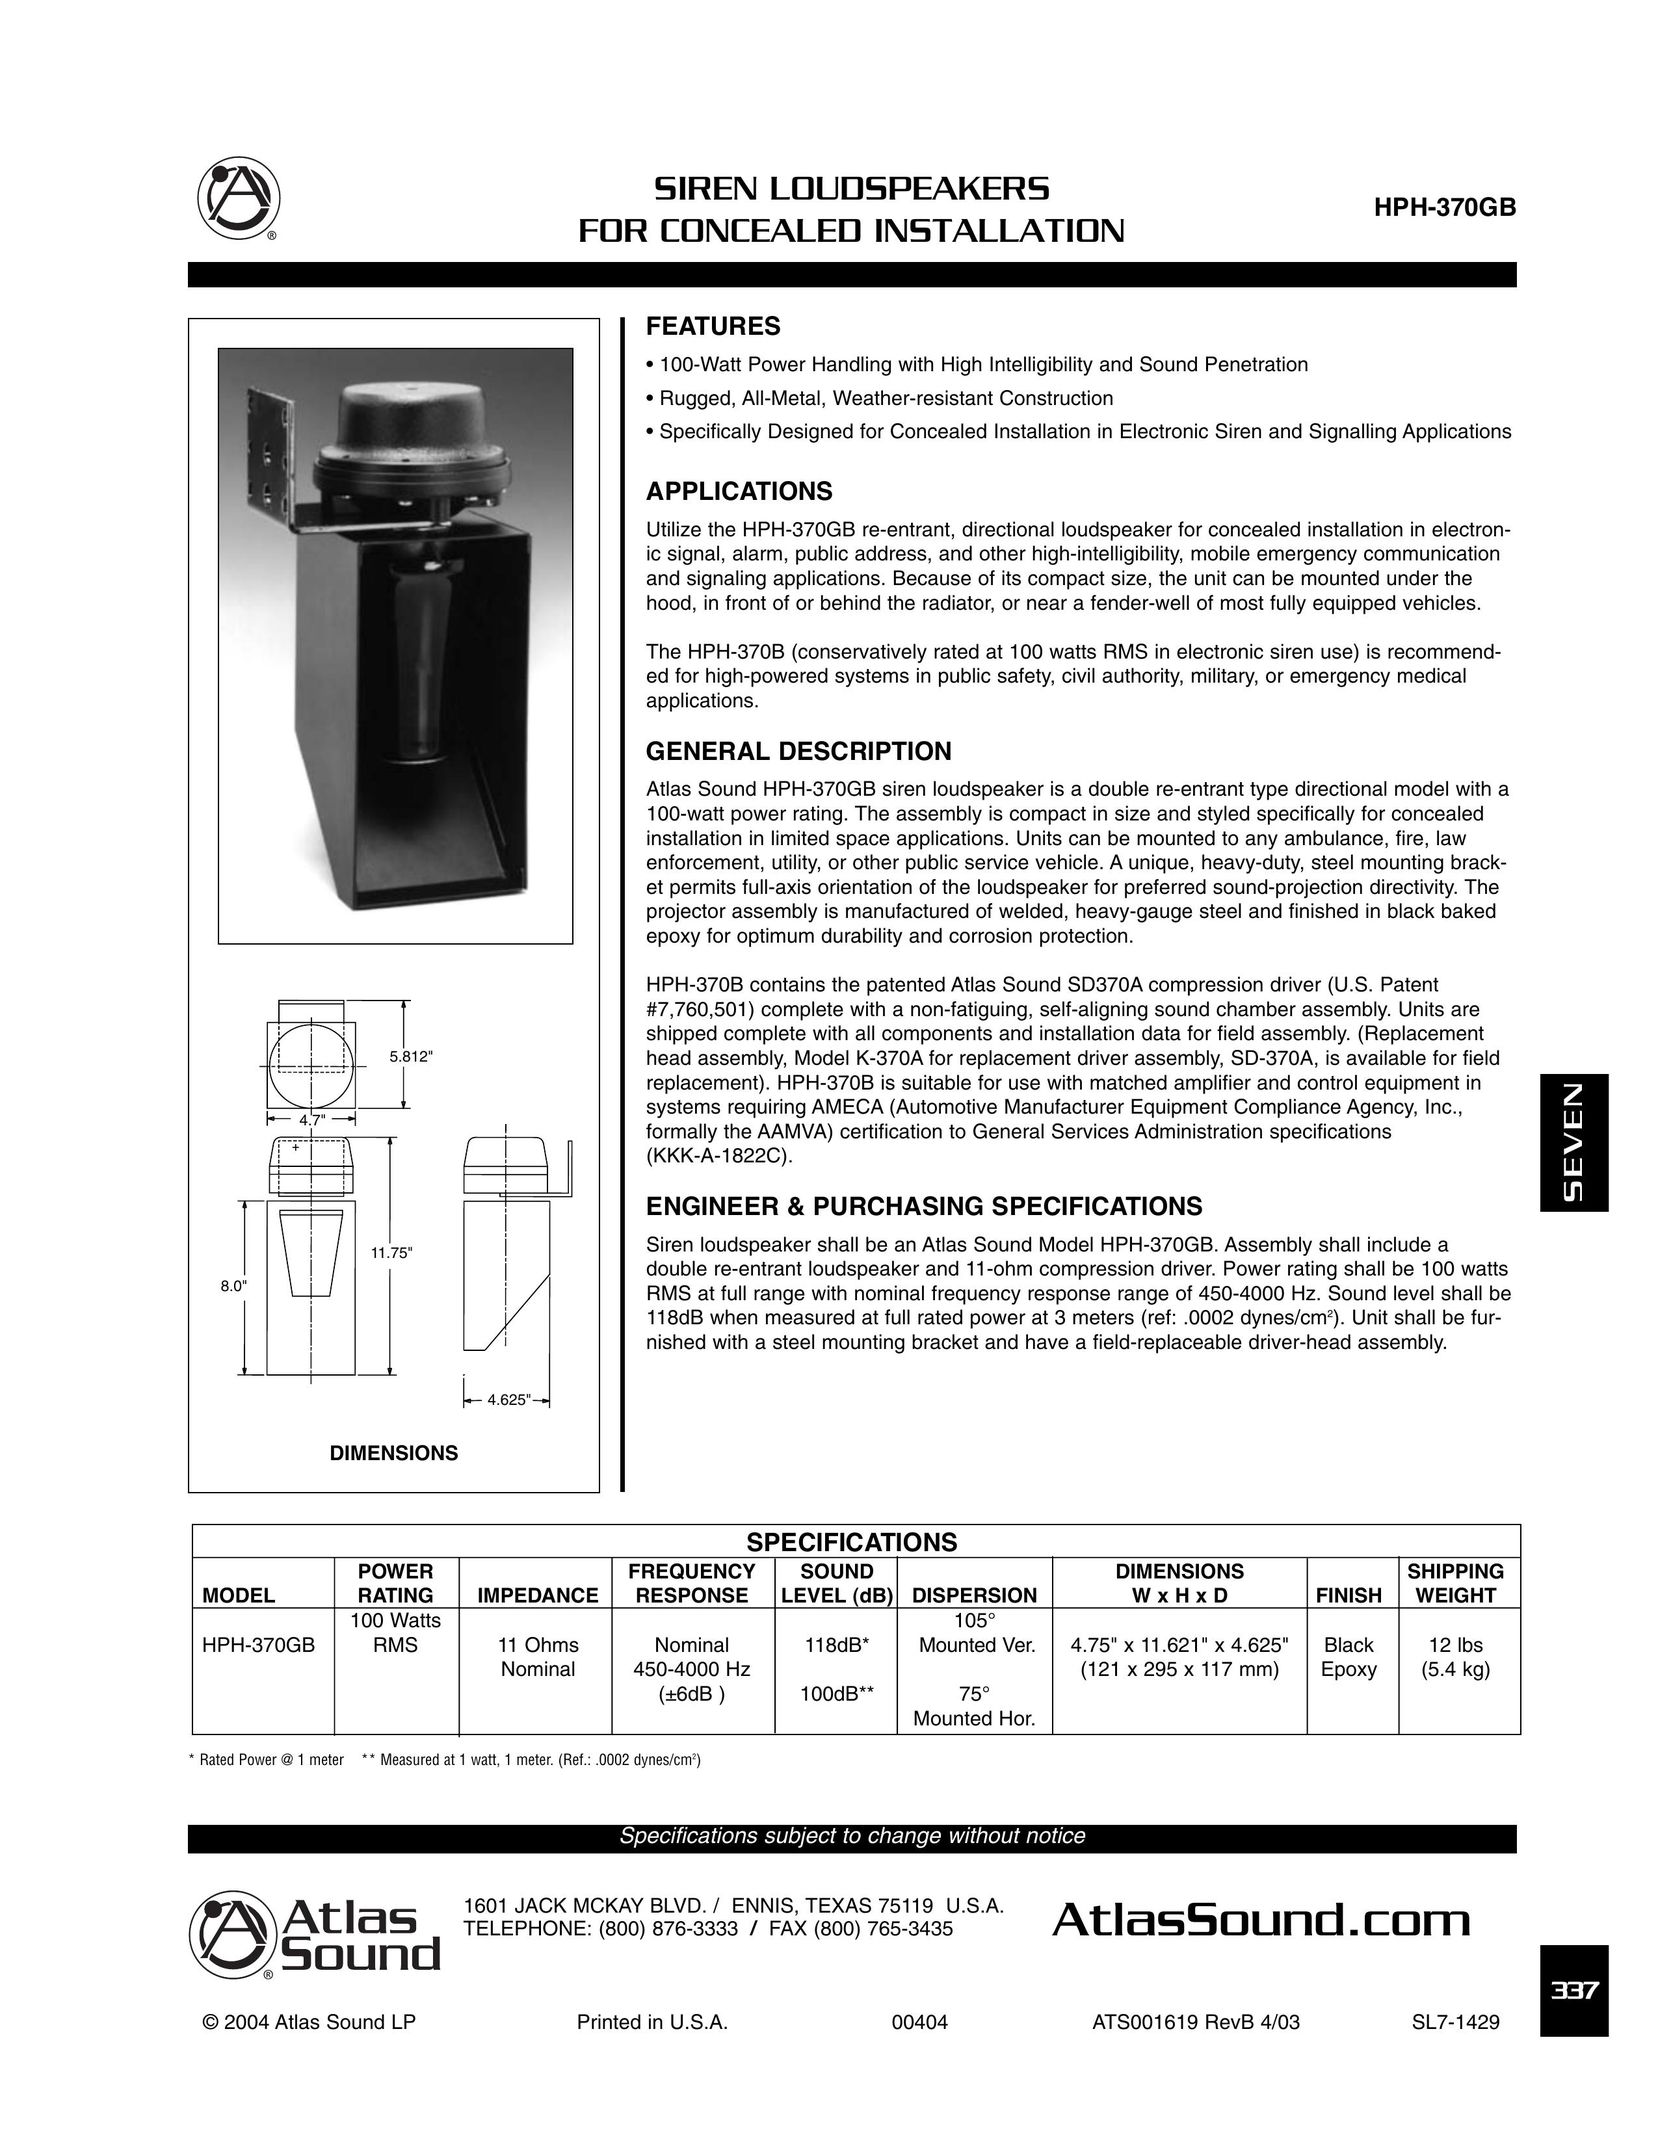 Atlas Sound HPH-370GB Speaker User Manual